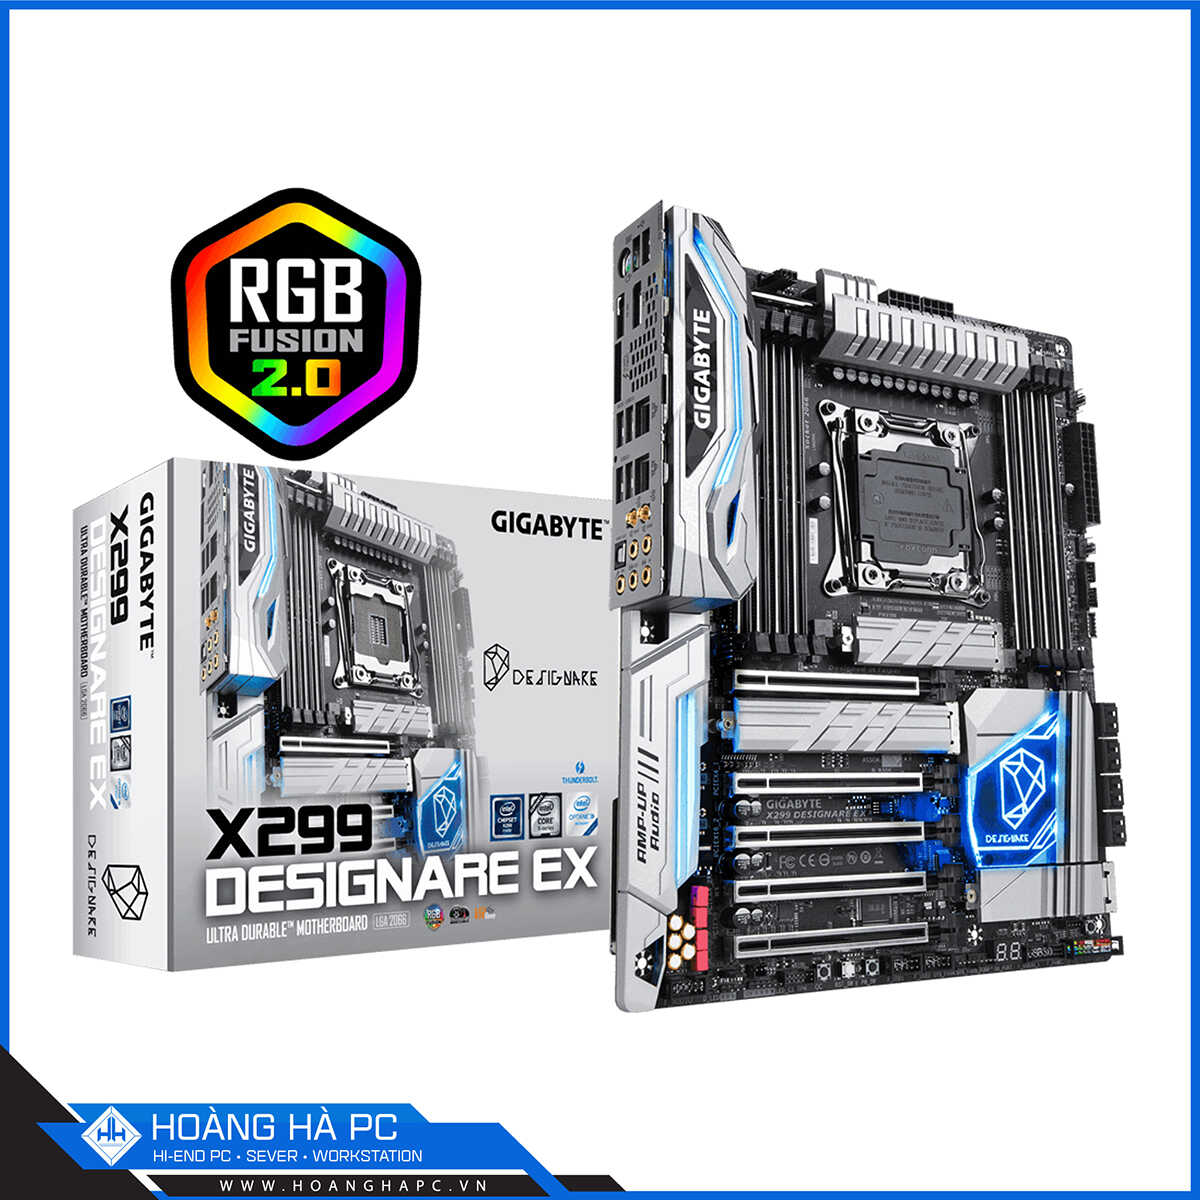 Mainboard GIGABYTE X299 DESIGNARE EX (Intel X299, LGA 2066, ATX, 8 Khe Cắm Ram DDR4)